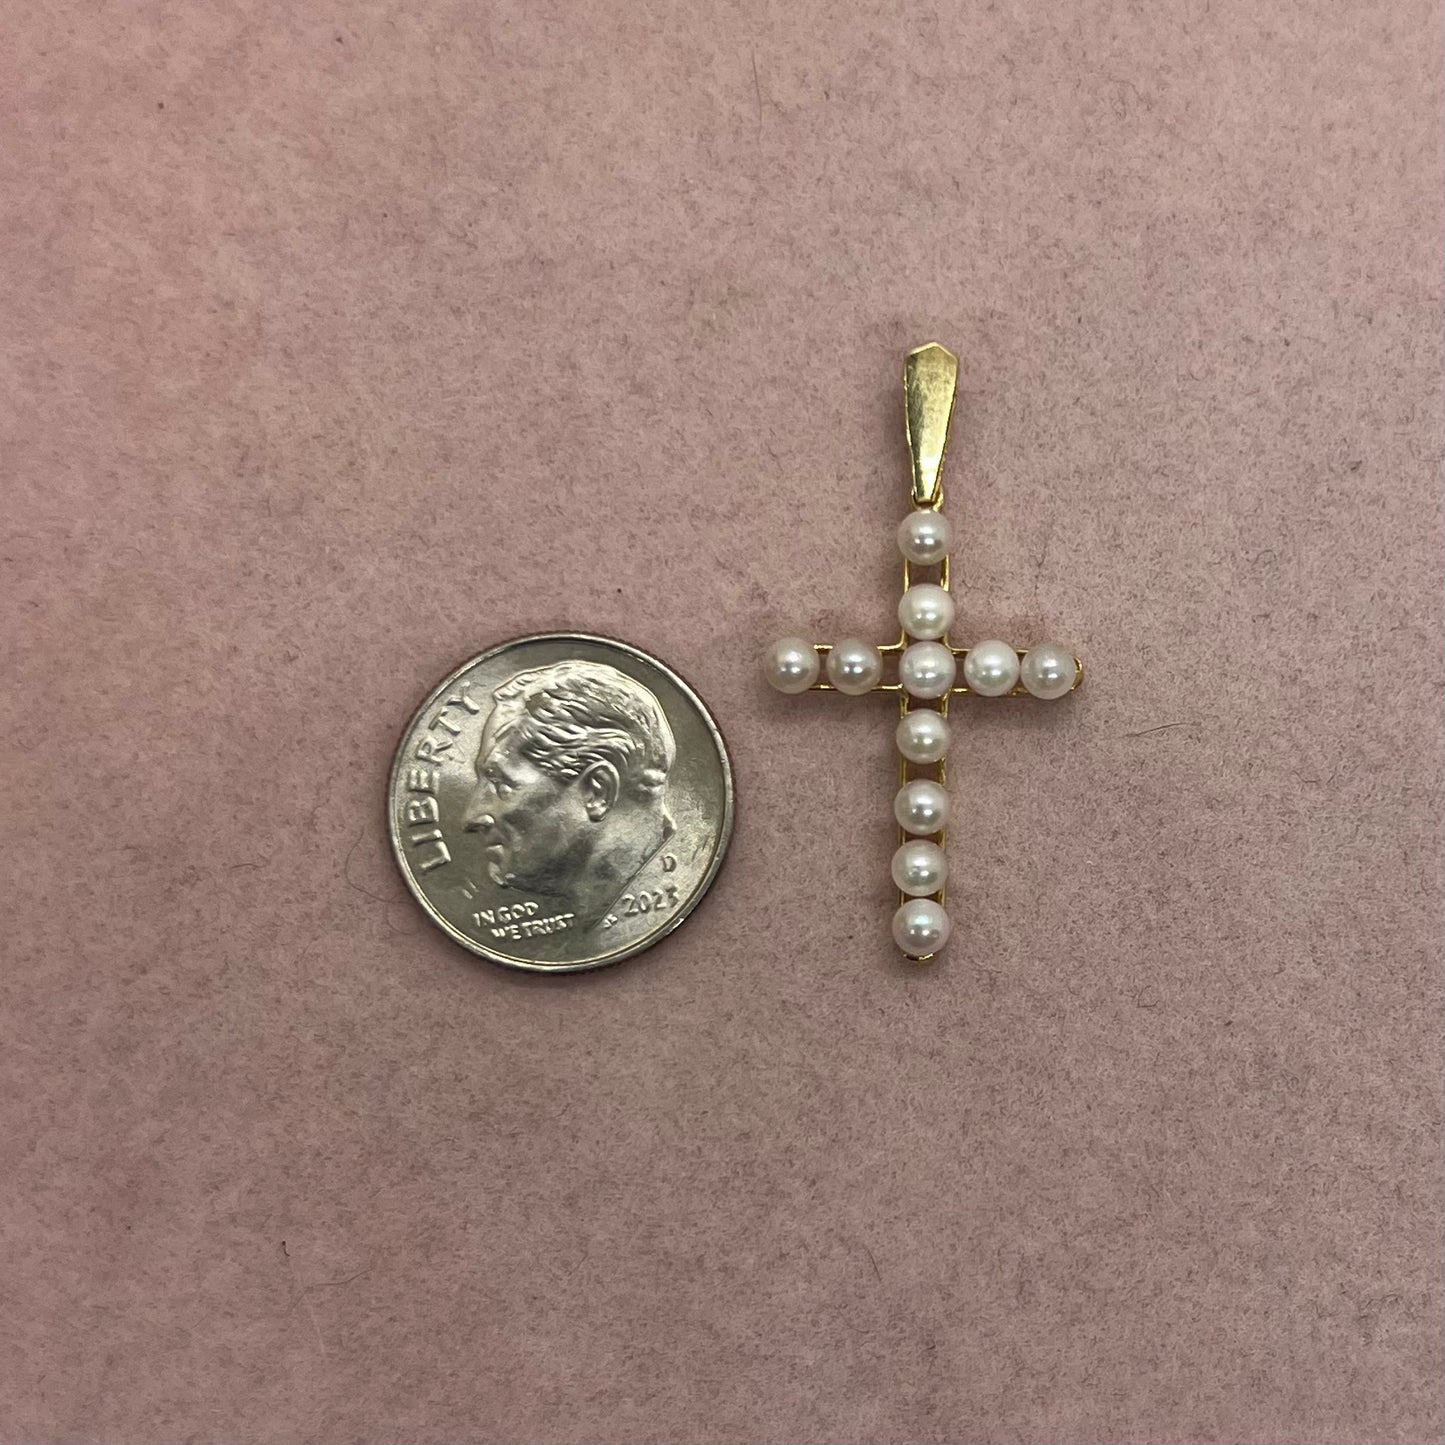 Pearl Cross Pendant